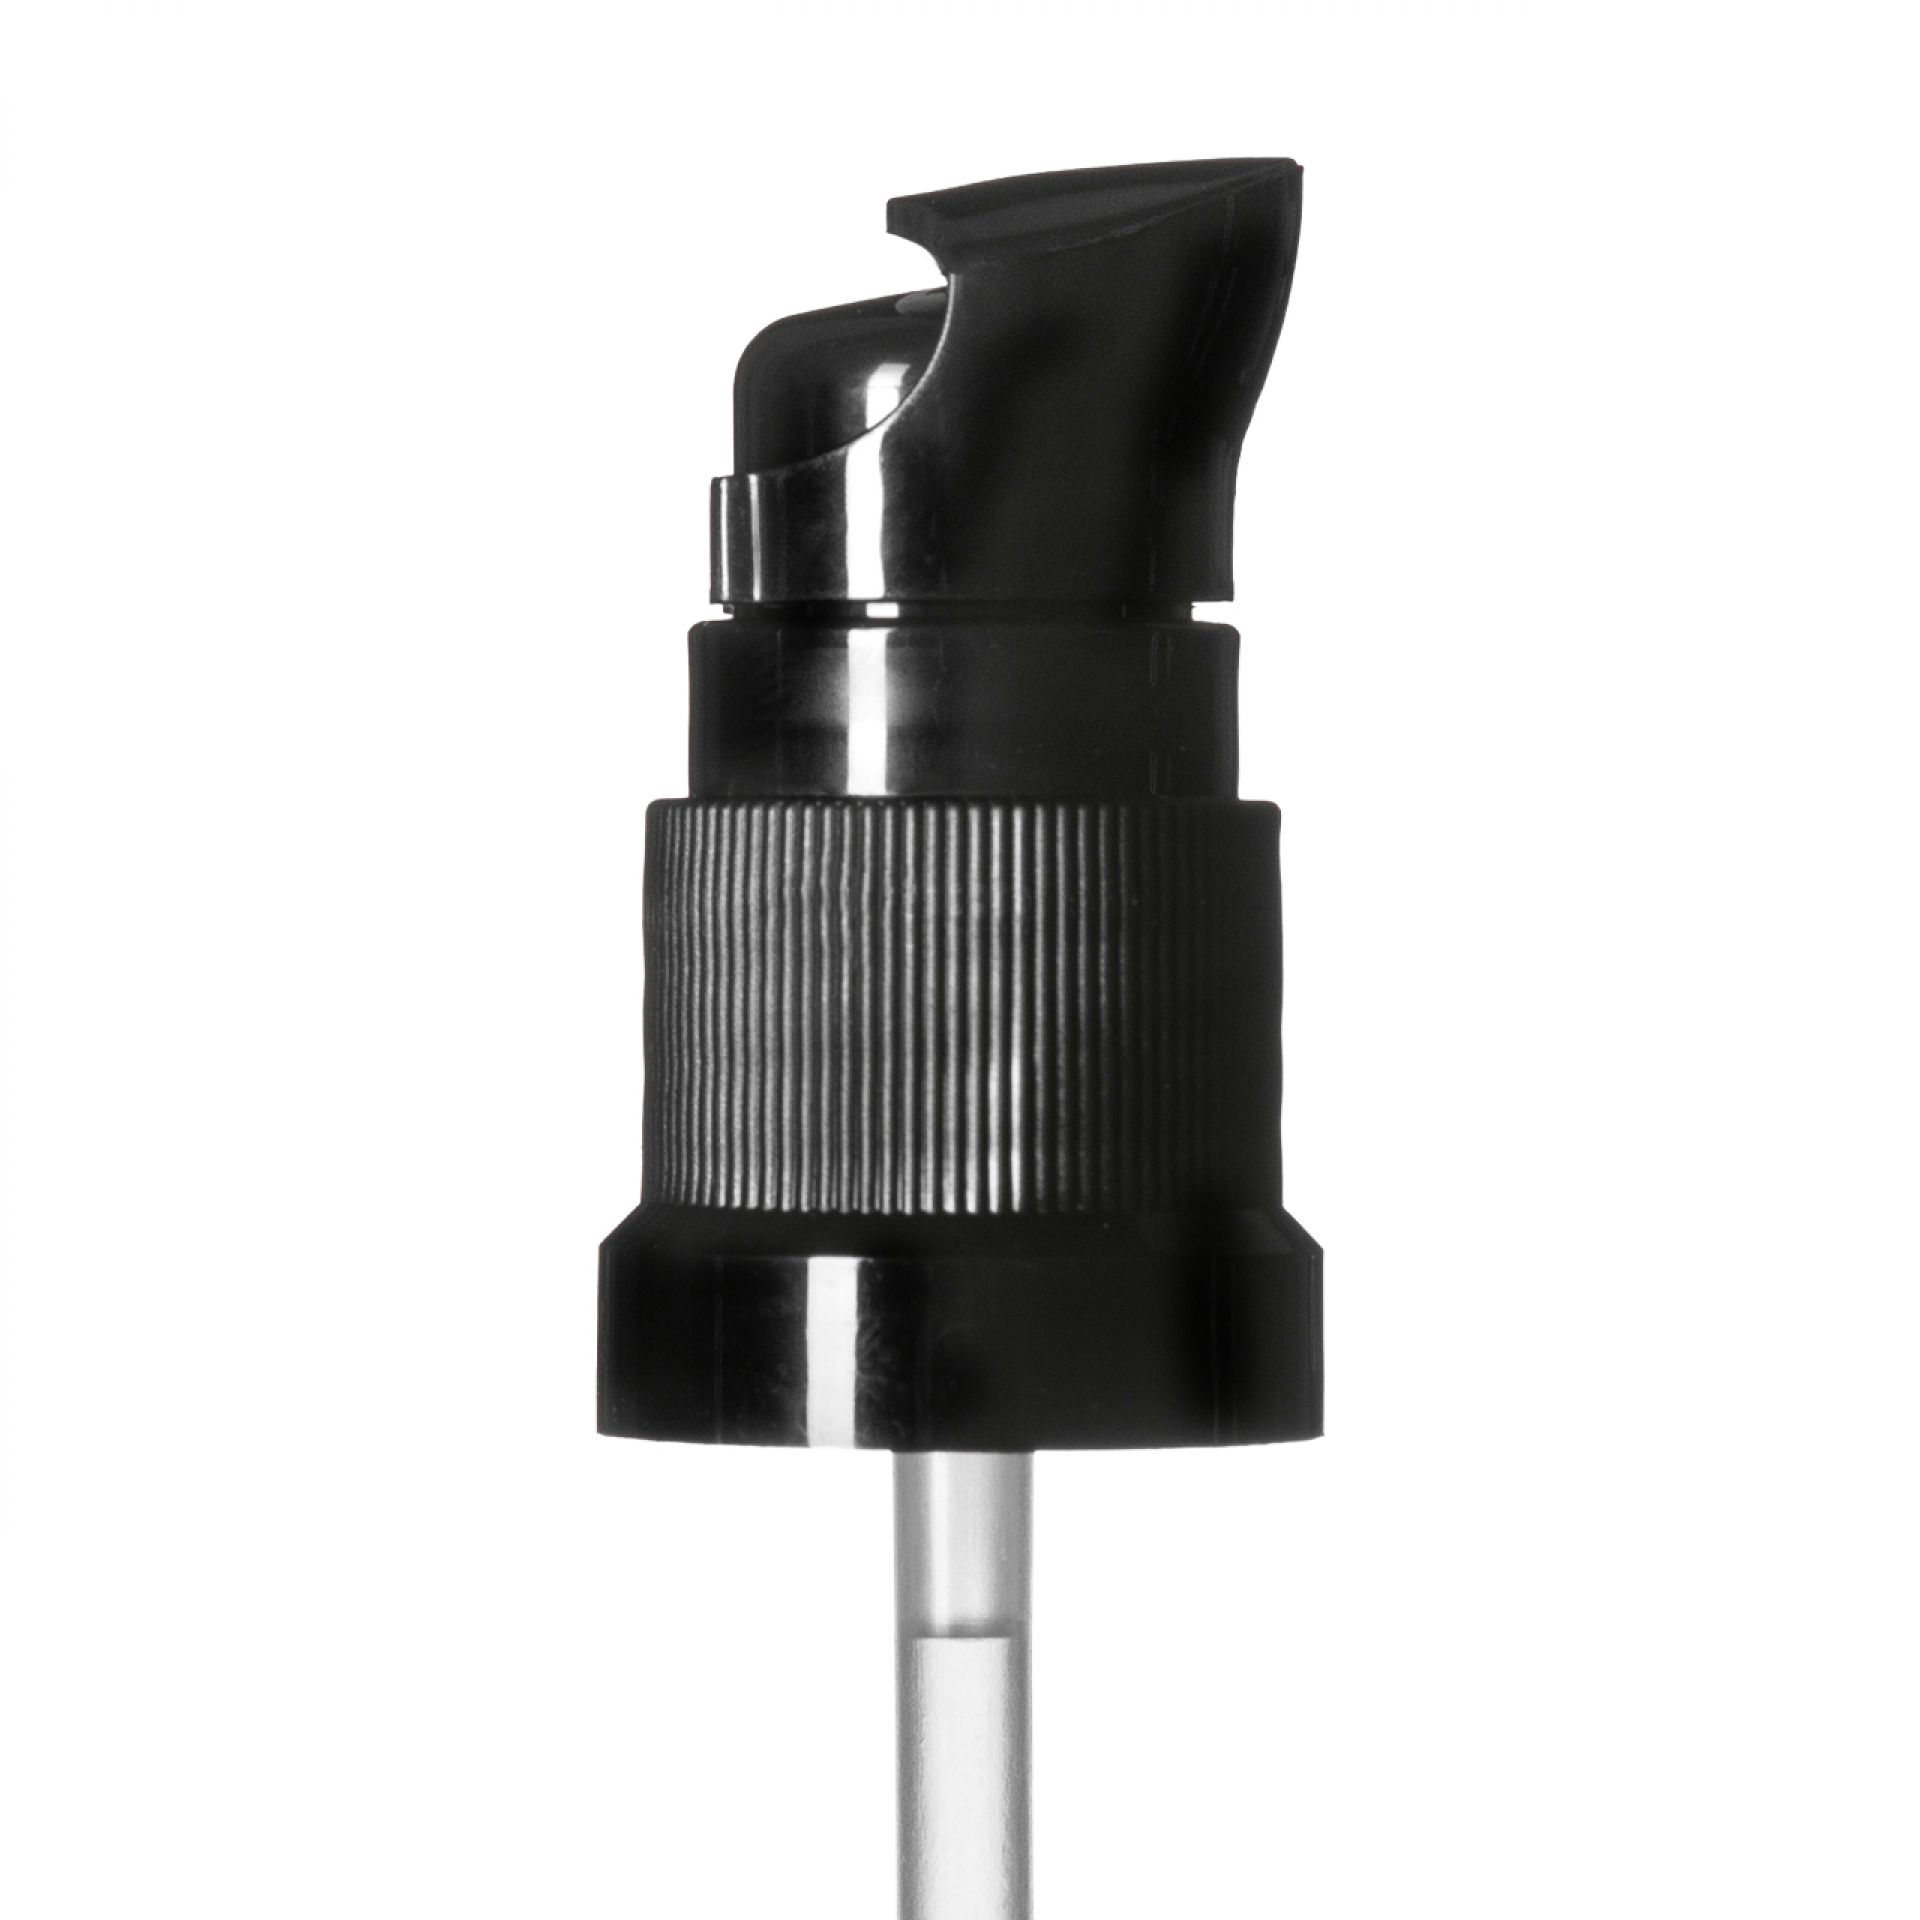 Lotion pump Metropolitan DIN18, PP, black, dose 0.15ml, black security clip (Orion 60)